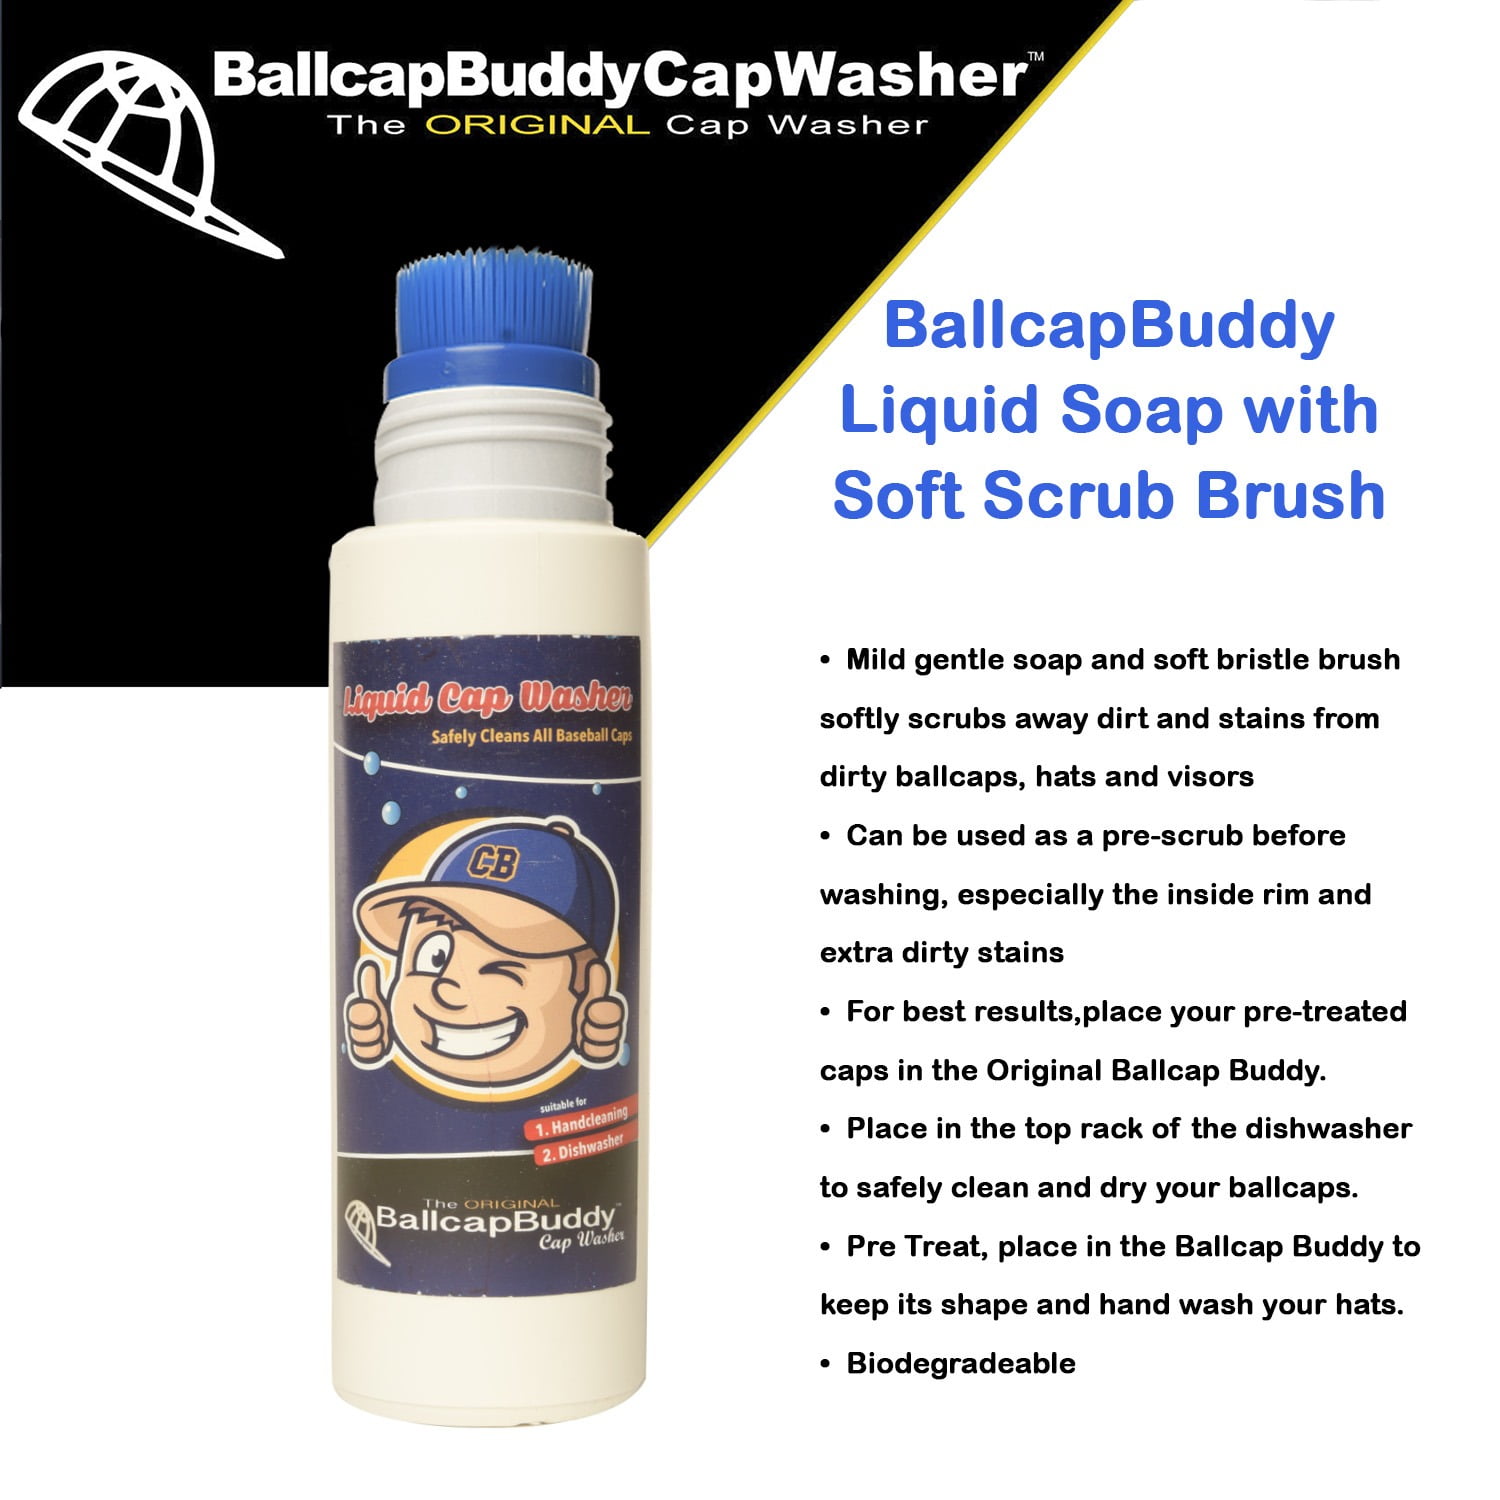 https://ballcapbuddy.com/wp-content/uploads/2020/08/BCB-liquid-soap-and-info.jpg